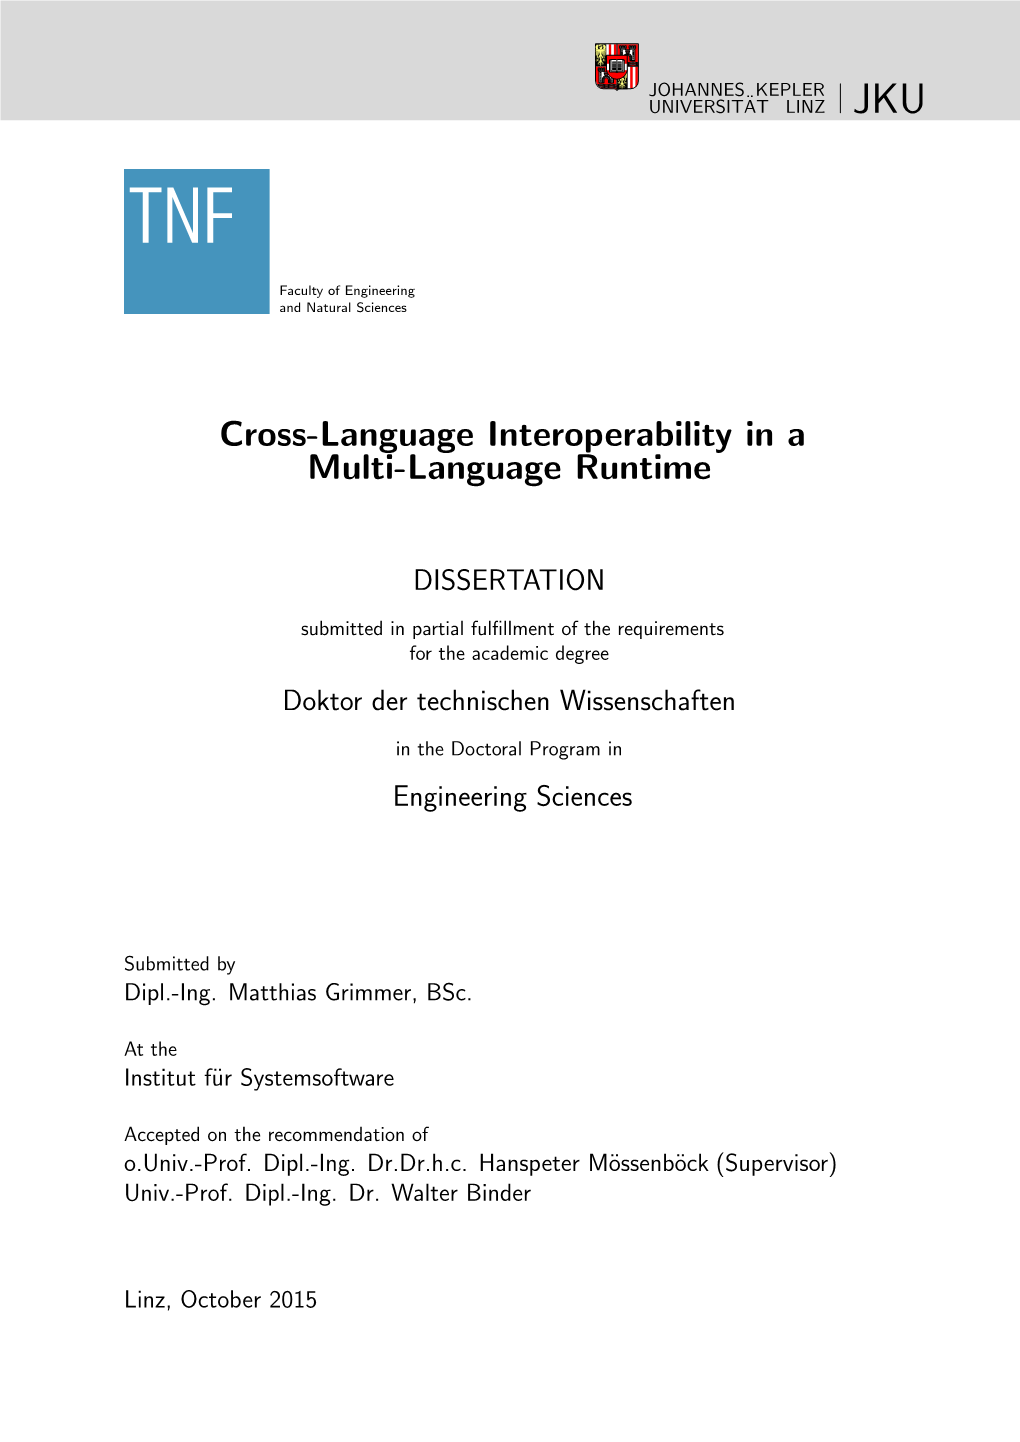 Cross-Language Interoperability in a Multi-Language Runtime